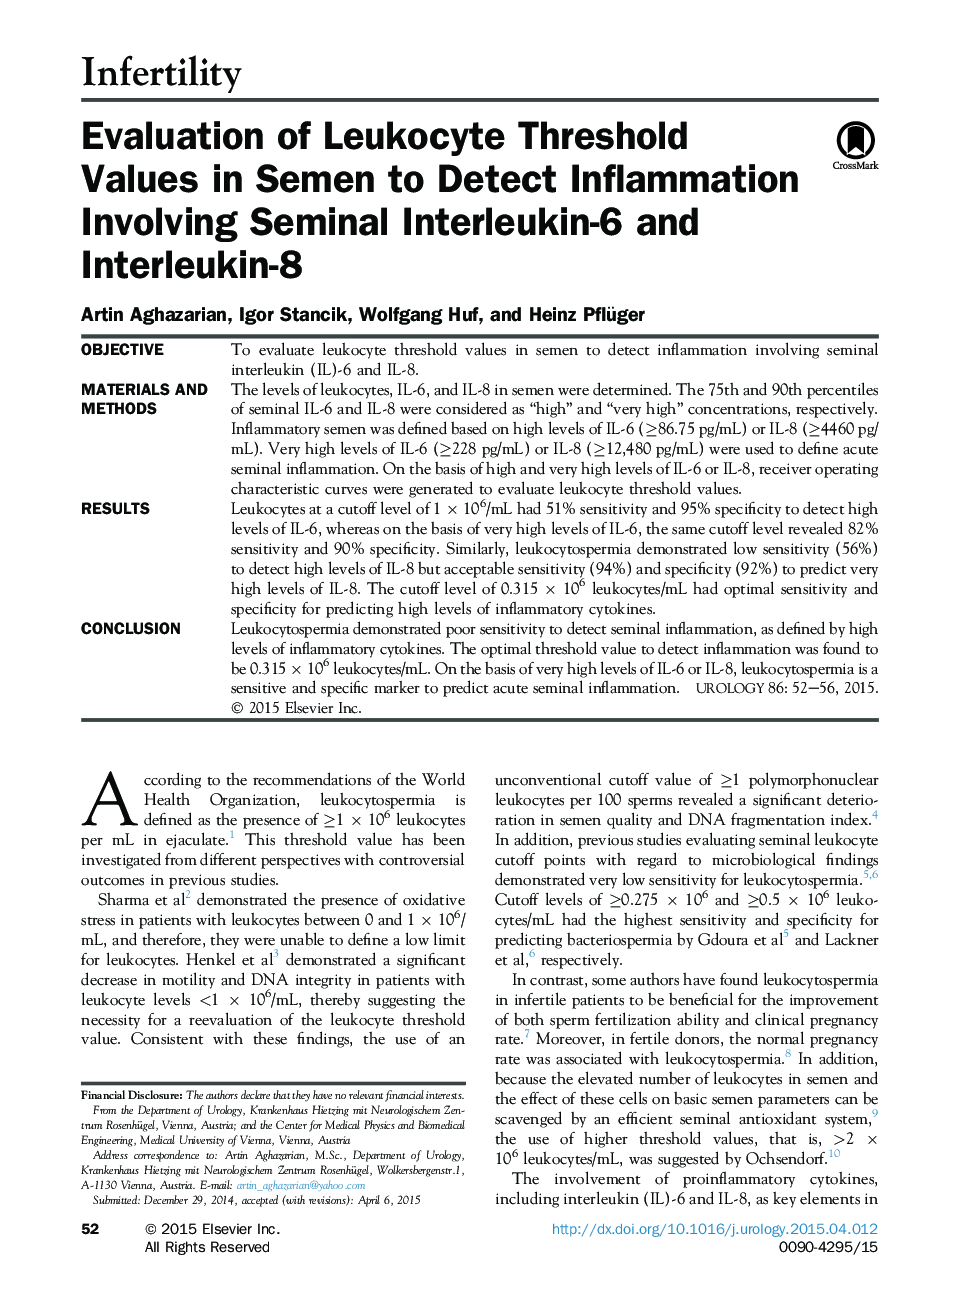 Evaluation of Leukocyte Threshold Values in Semen to Detect Inflammation Involving Seminal Interleukin-6 and Interleukin-8 